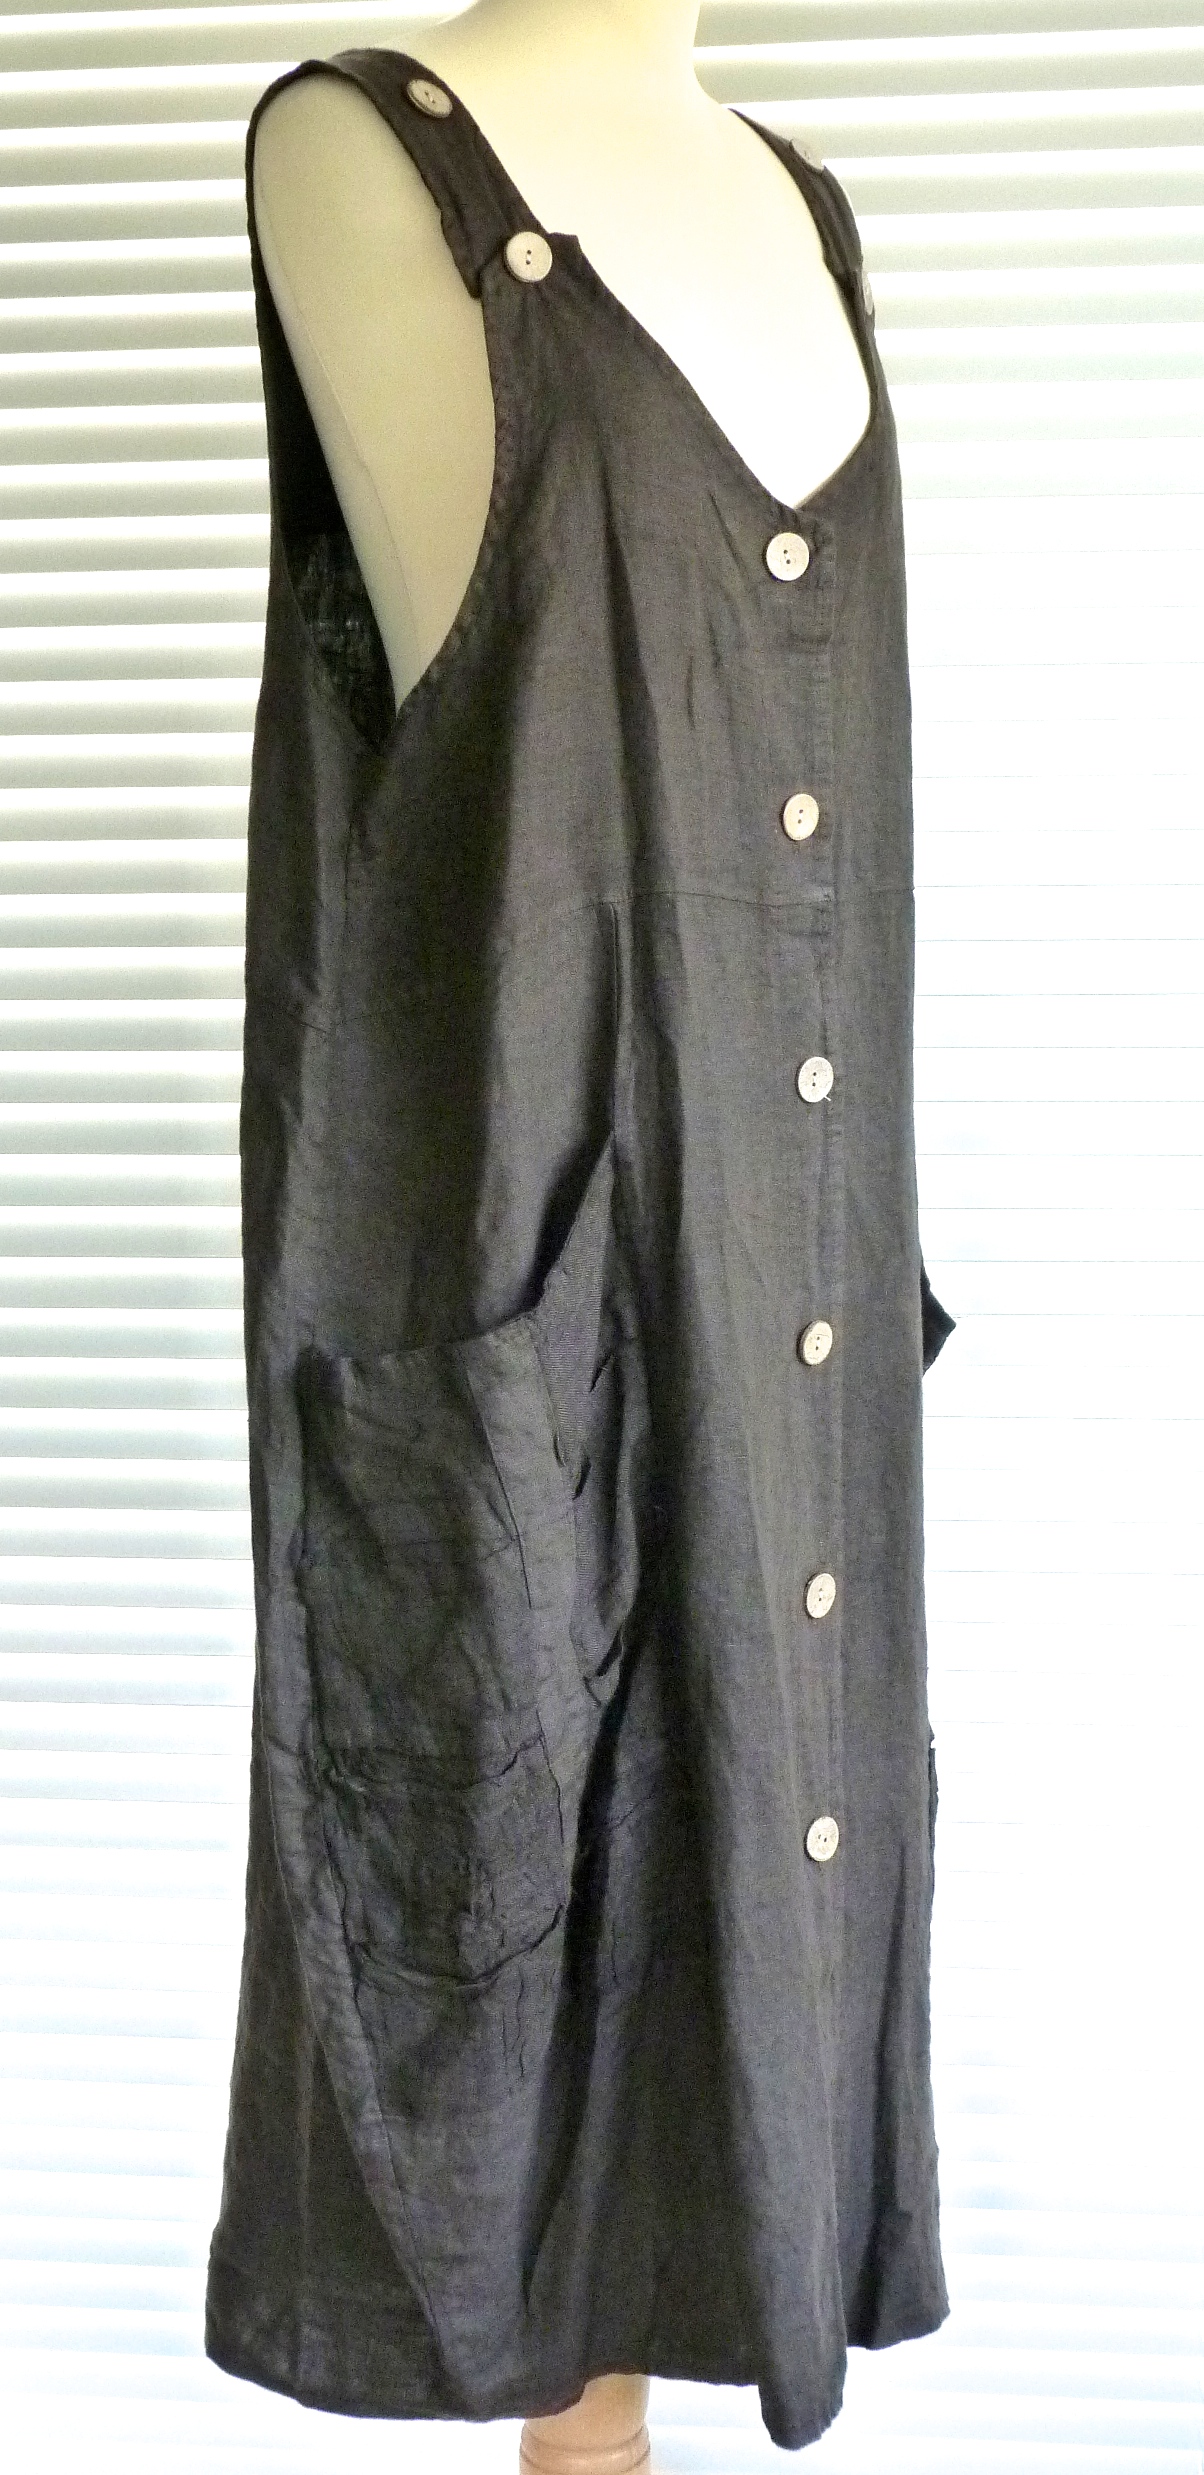 Ladies lagenlook quirky linen pinafore dress with pockets – Harriet | eBay